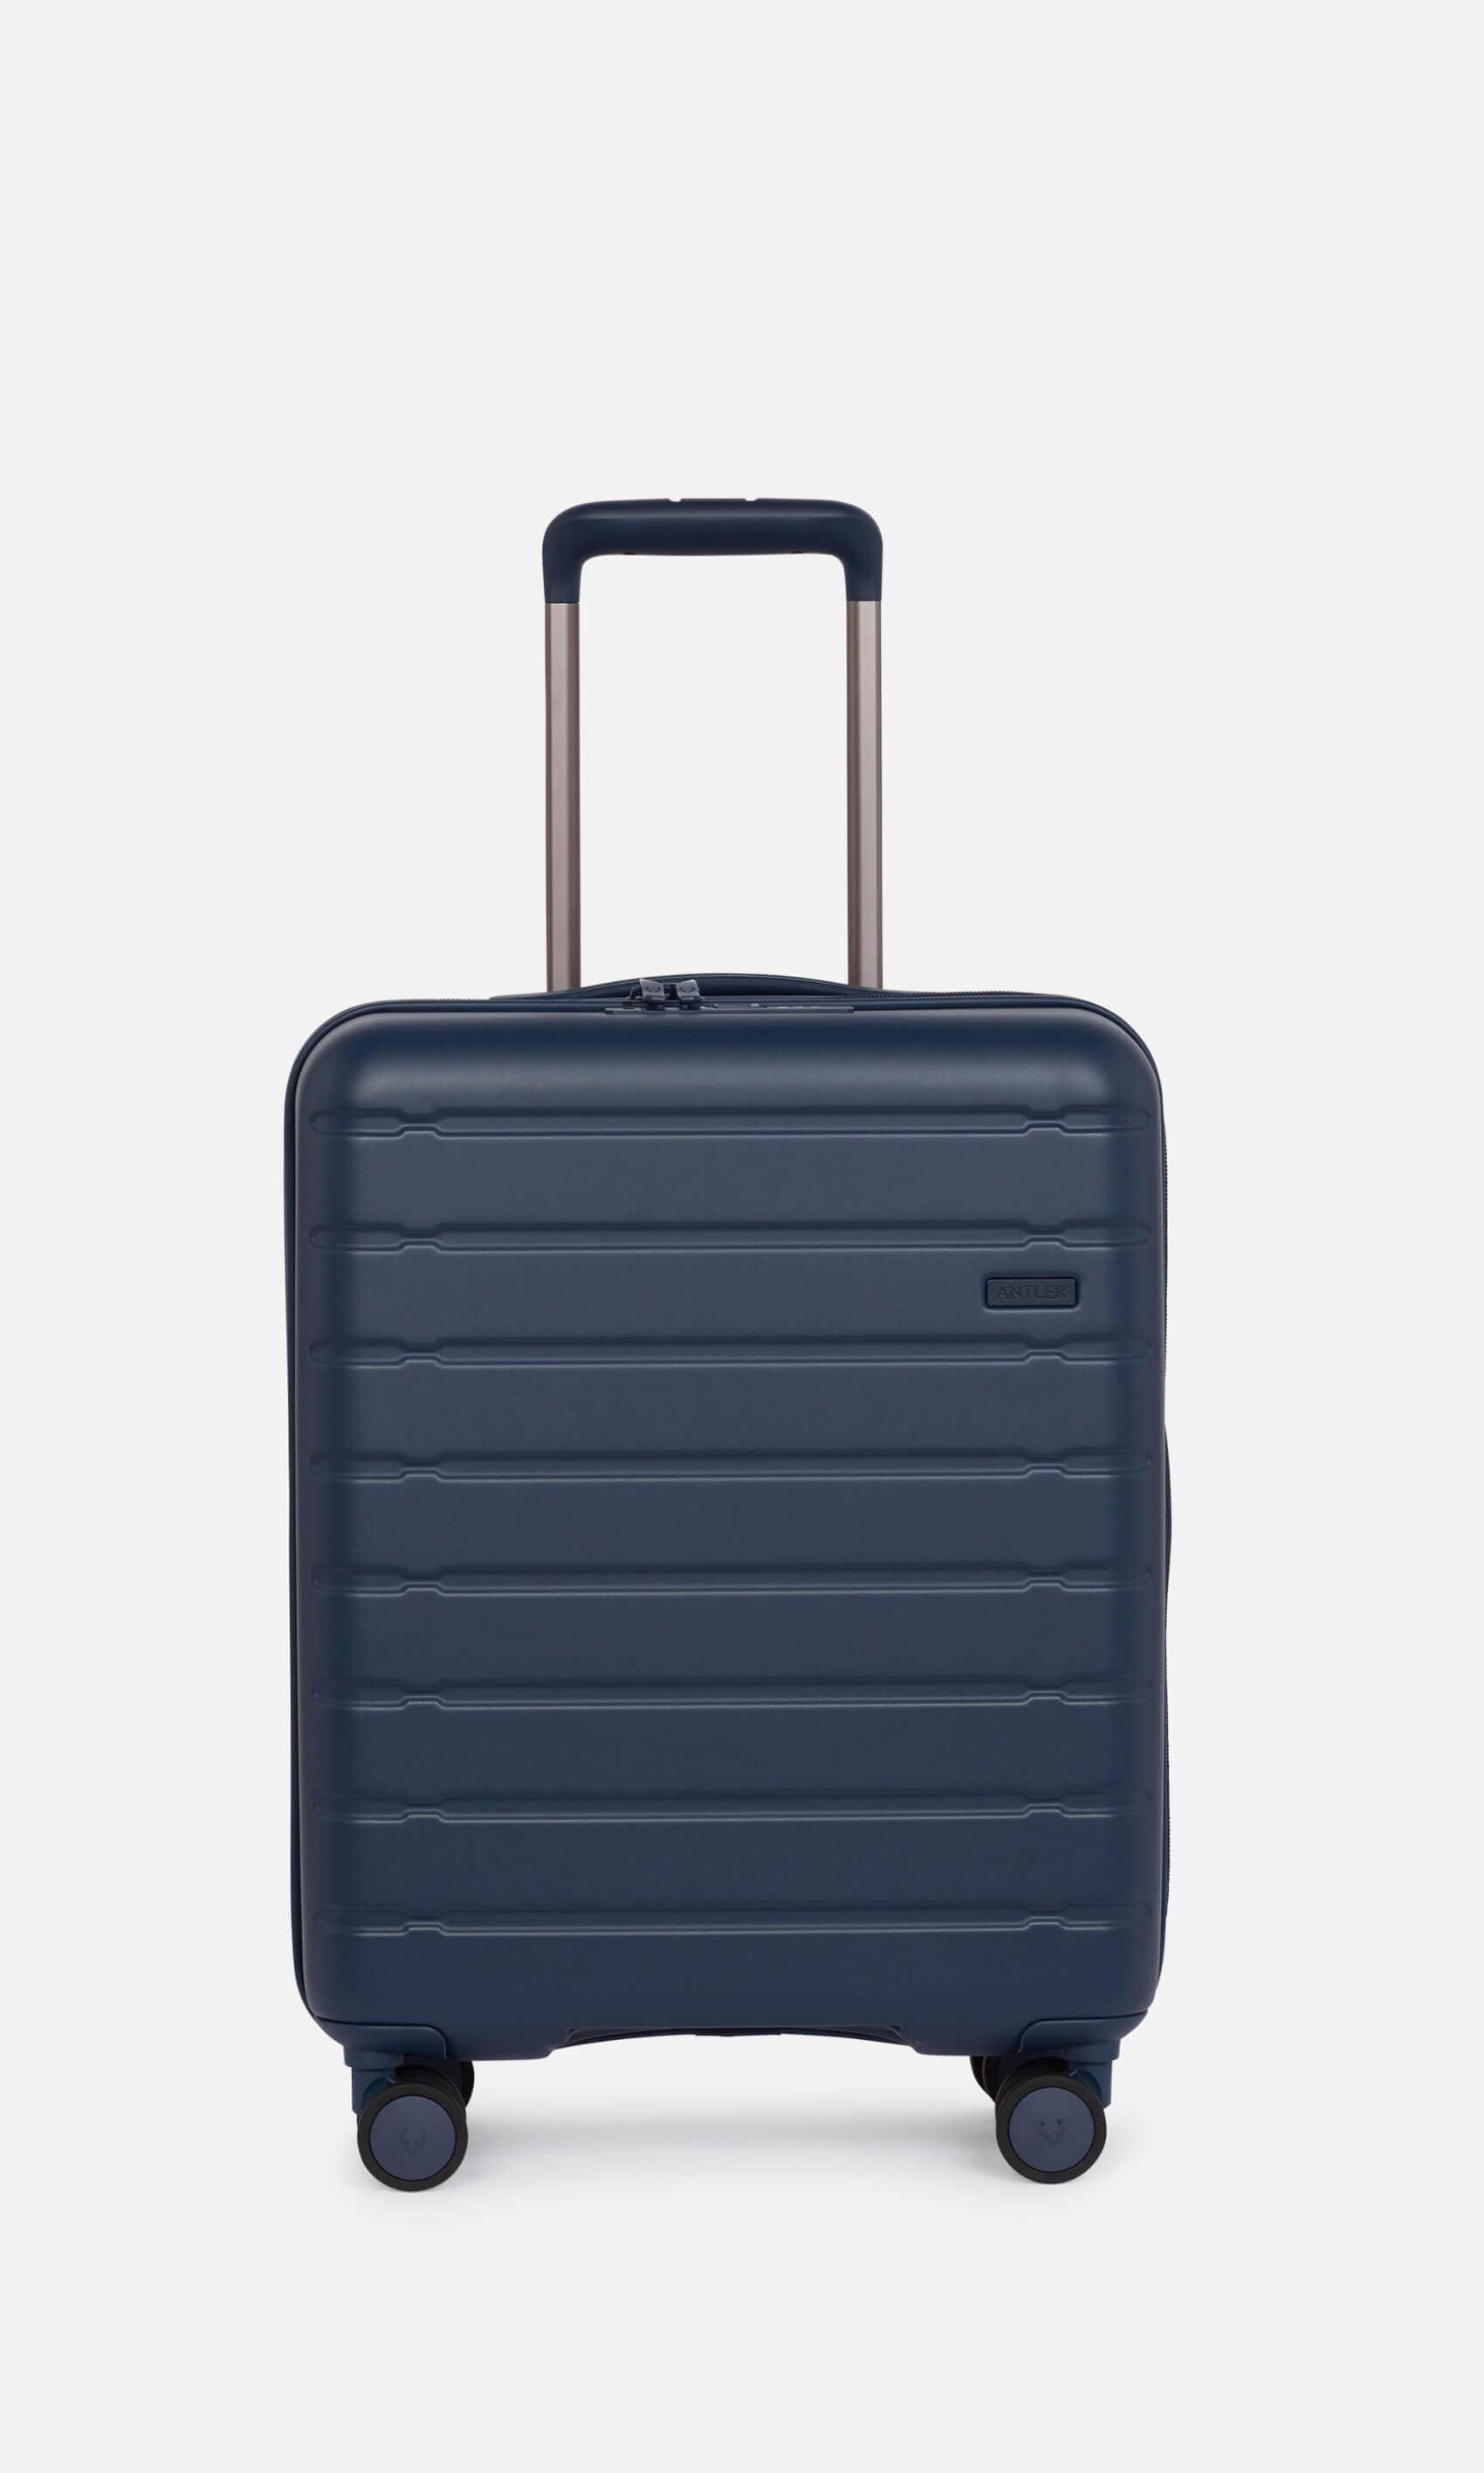 Antler Luggage -  Stamford set in dusk blue - Hard Suitcases Stamford Set of 3 Suitcases Blue | Hard Luggage | Antler 